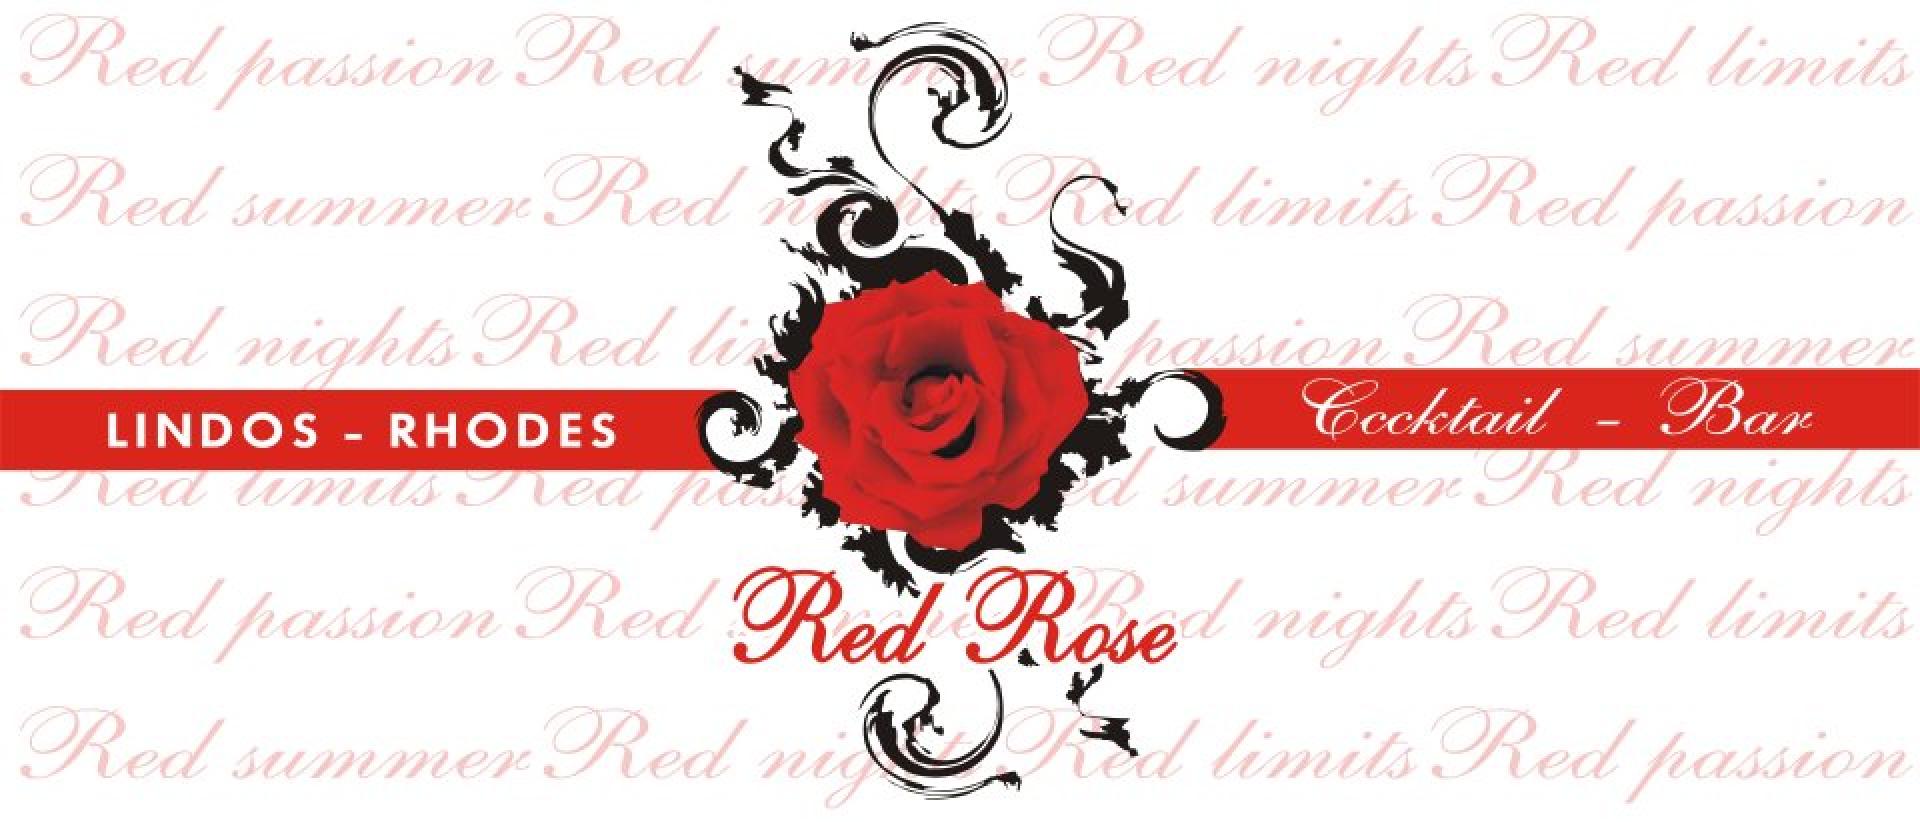 Red Rose - Cocktail Bar